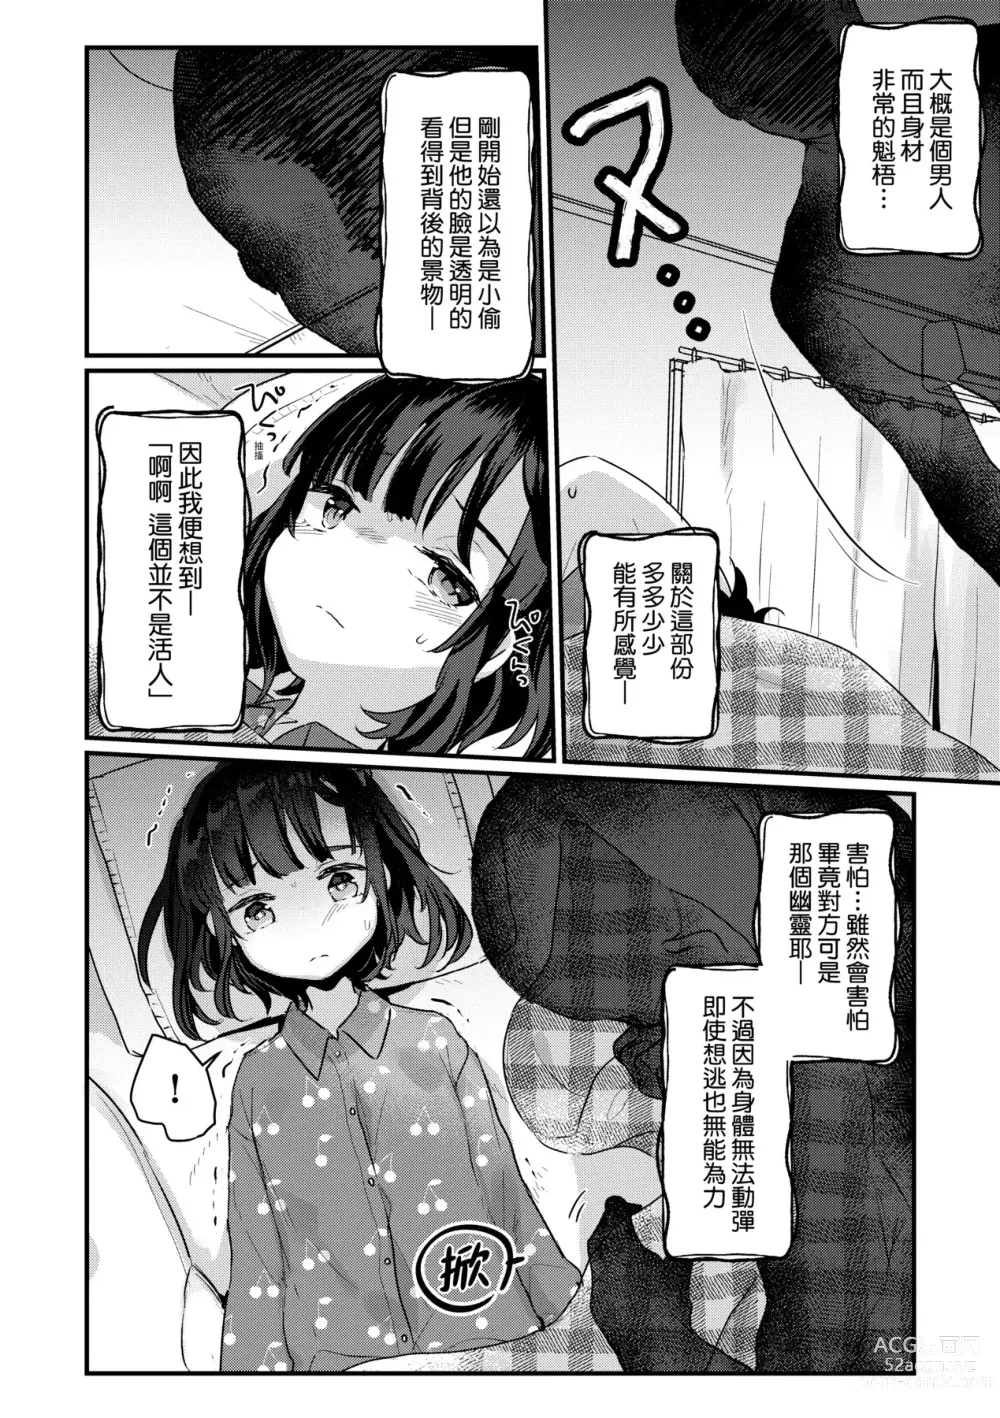 Page 11 of manga 家裡有位喜歡作怪的幽靈先生